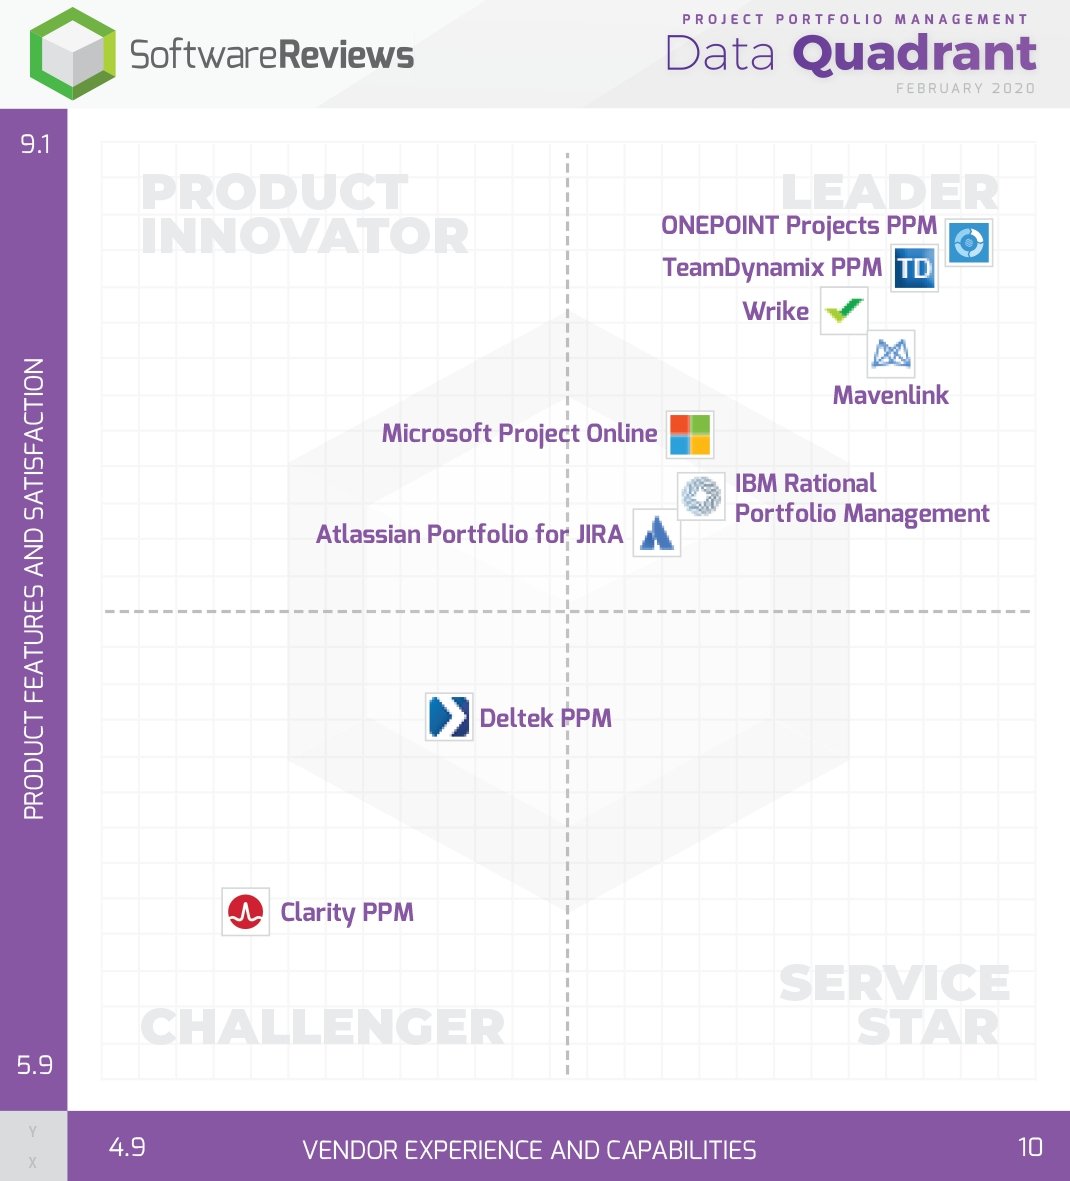 2020 Project Portfolio Management Data Quadrant Awards (Photo: Business Wire)